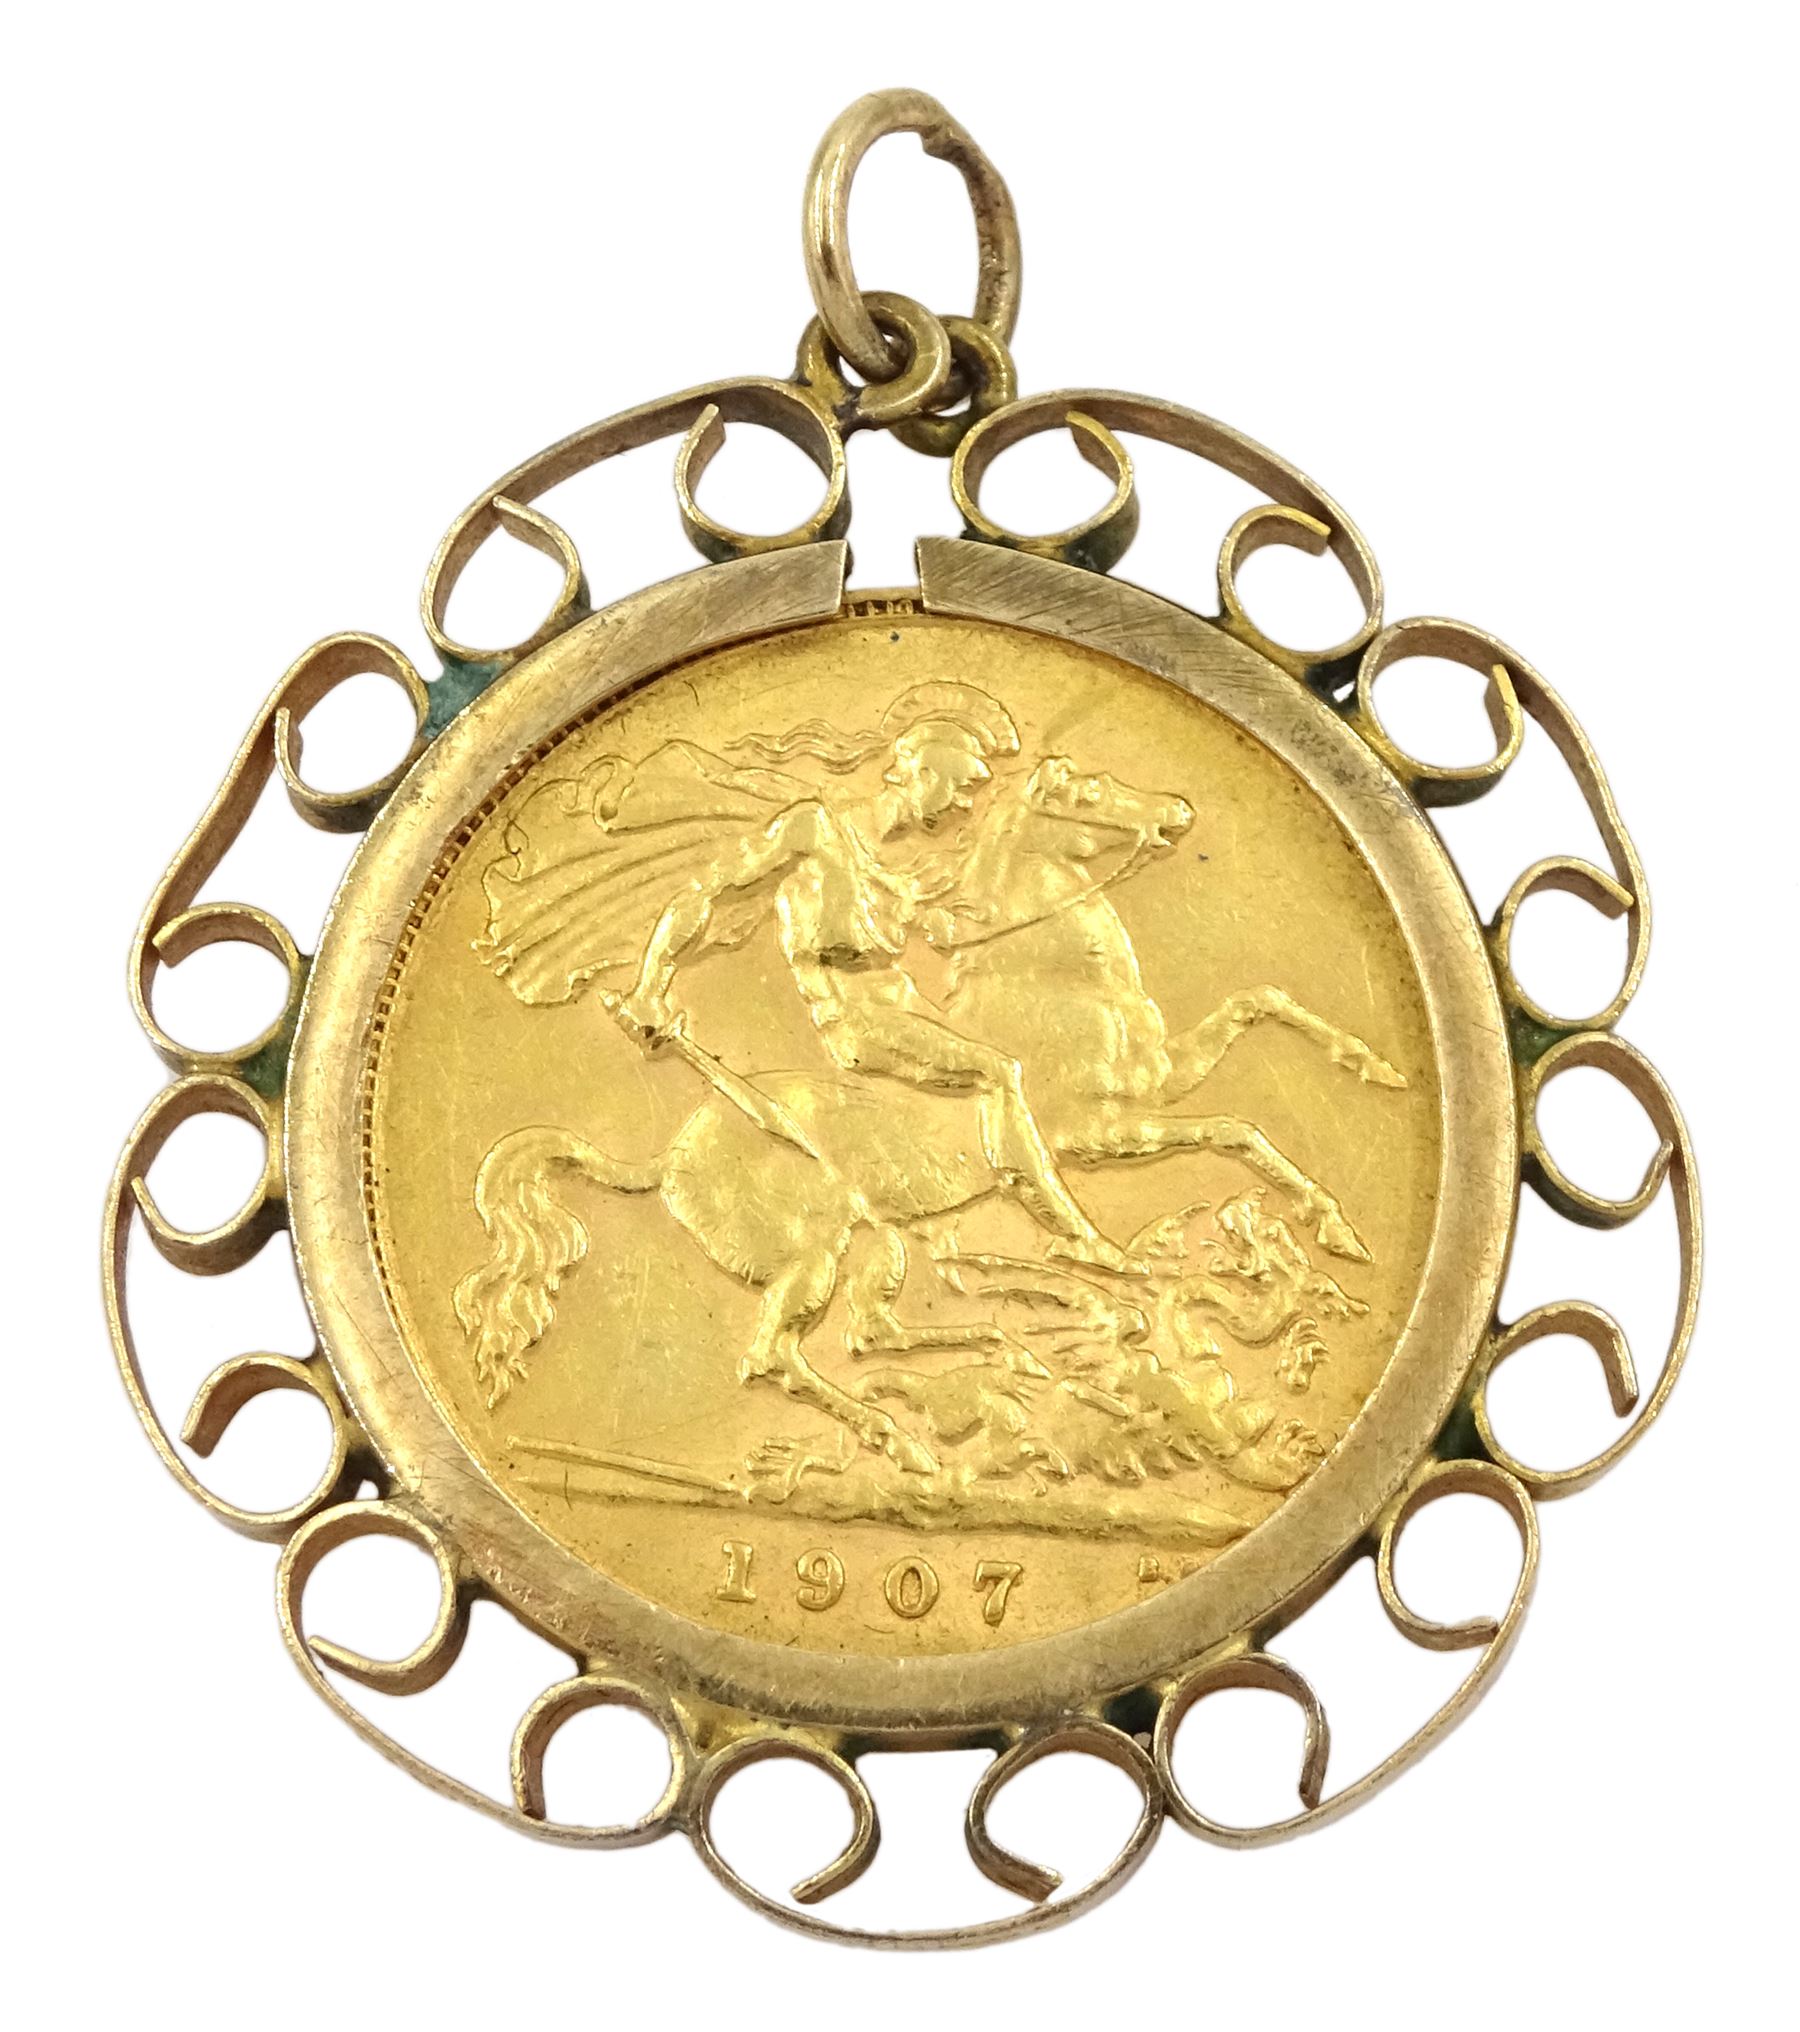 King Edward VII 1907 gold half sovereign coin - Image 2 of 2